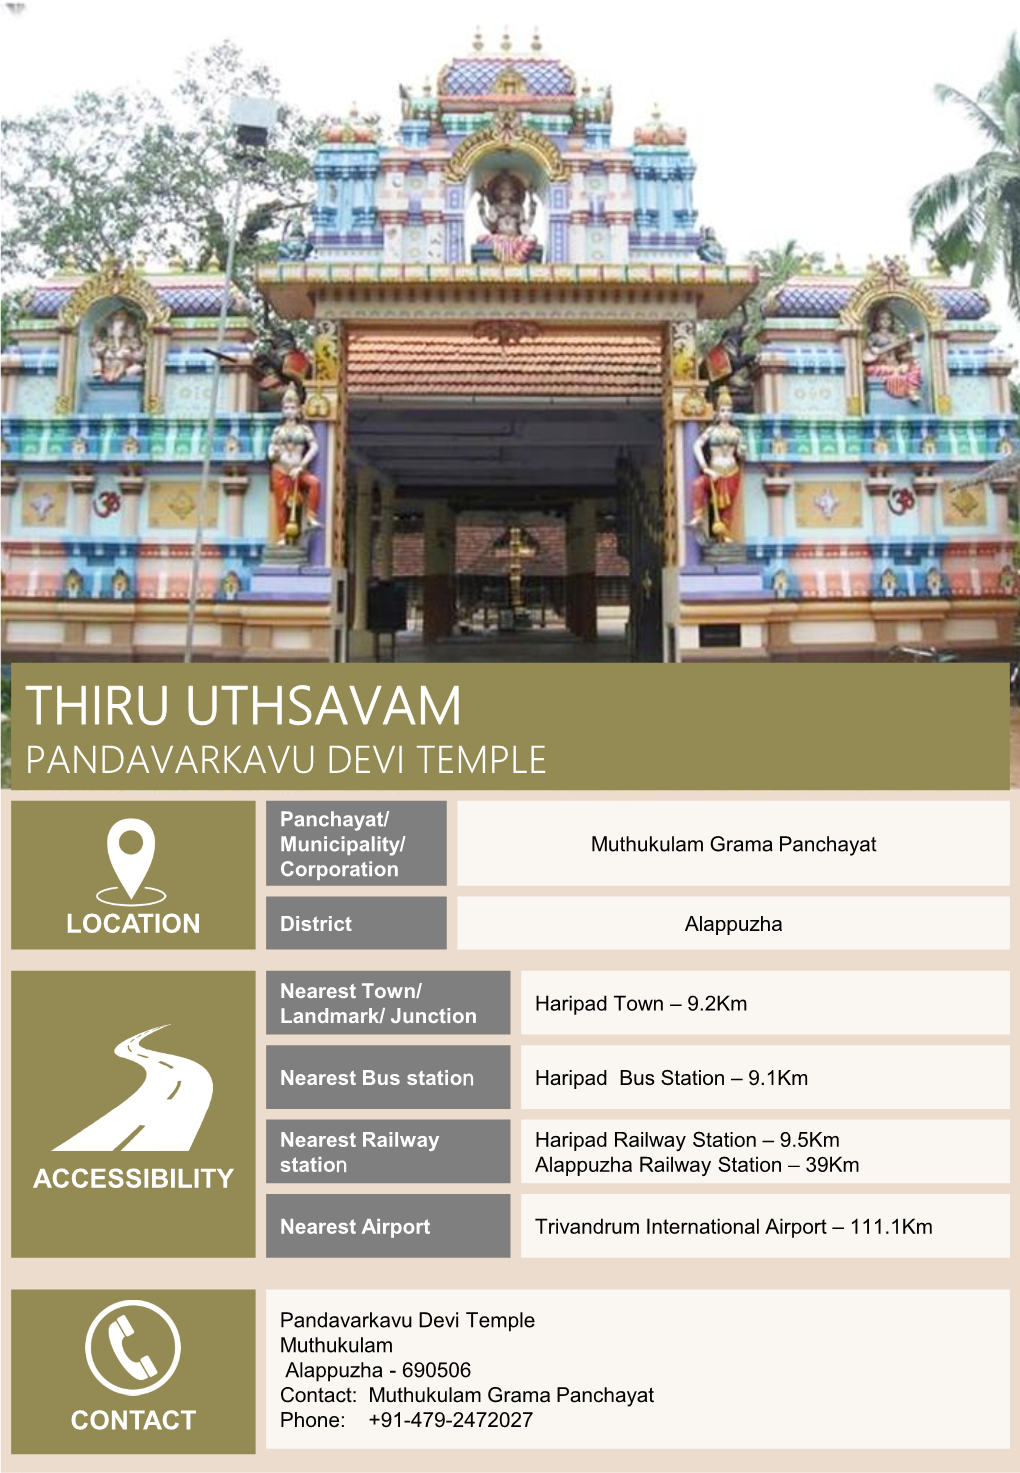 Thiru Uthsavam Pandavarkavu Devi Temple